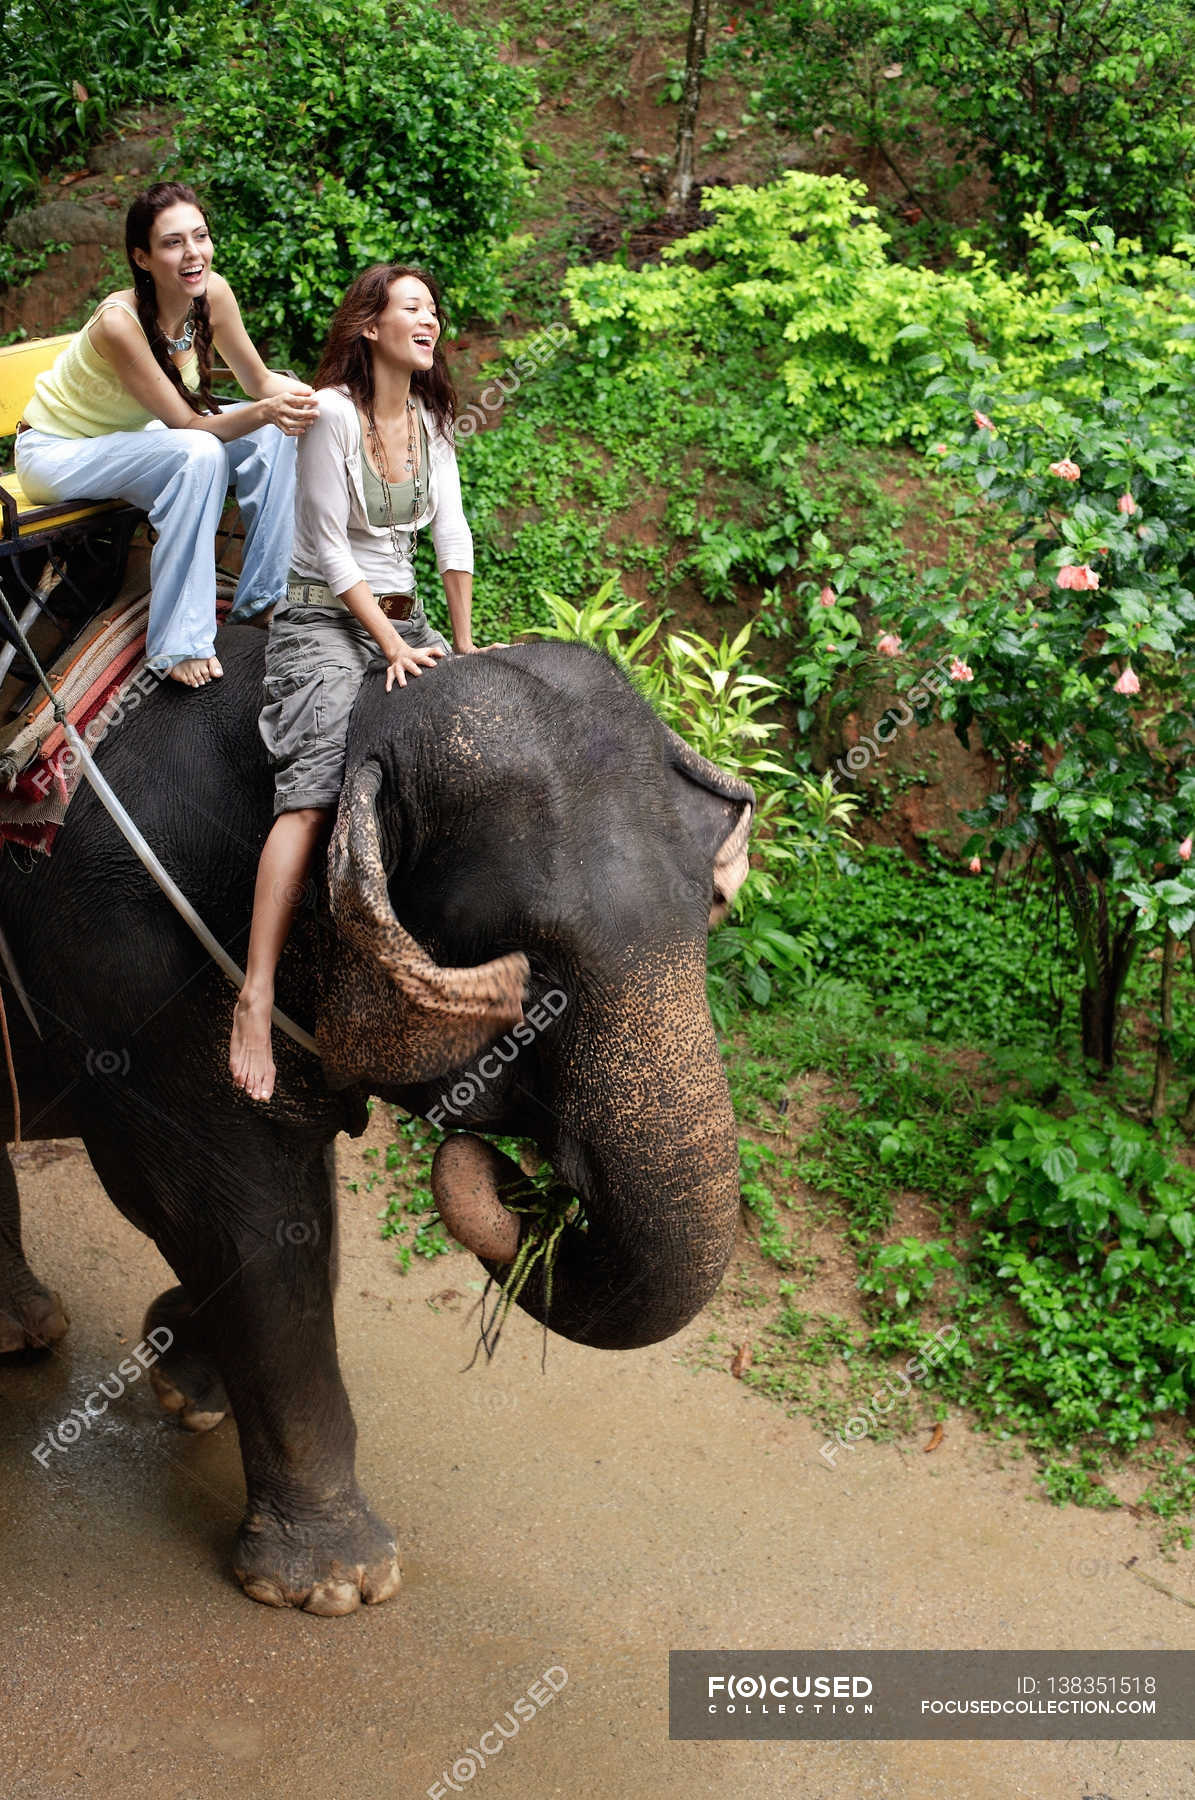 https://st.focusedcollection.com/11214574/i/1800/focused_138351518-stock-photo-women-riding-on-elephant.jpg